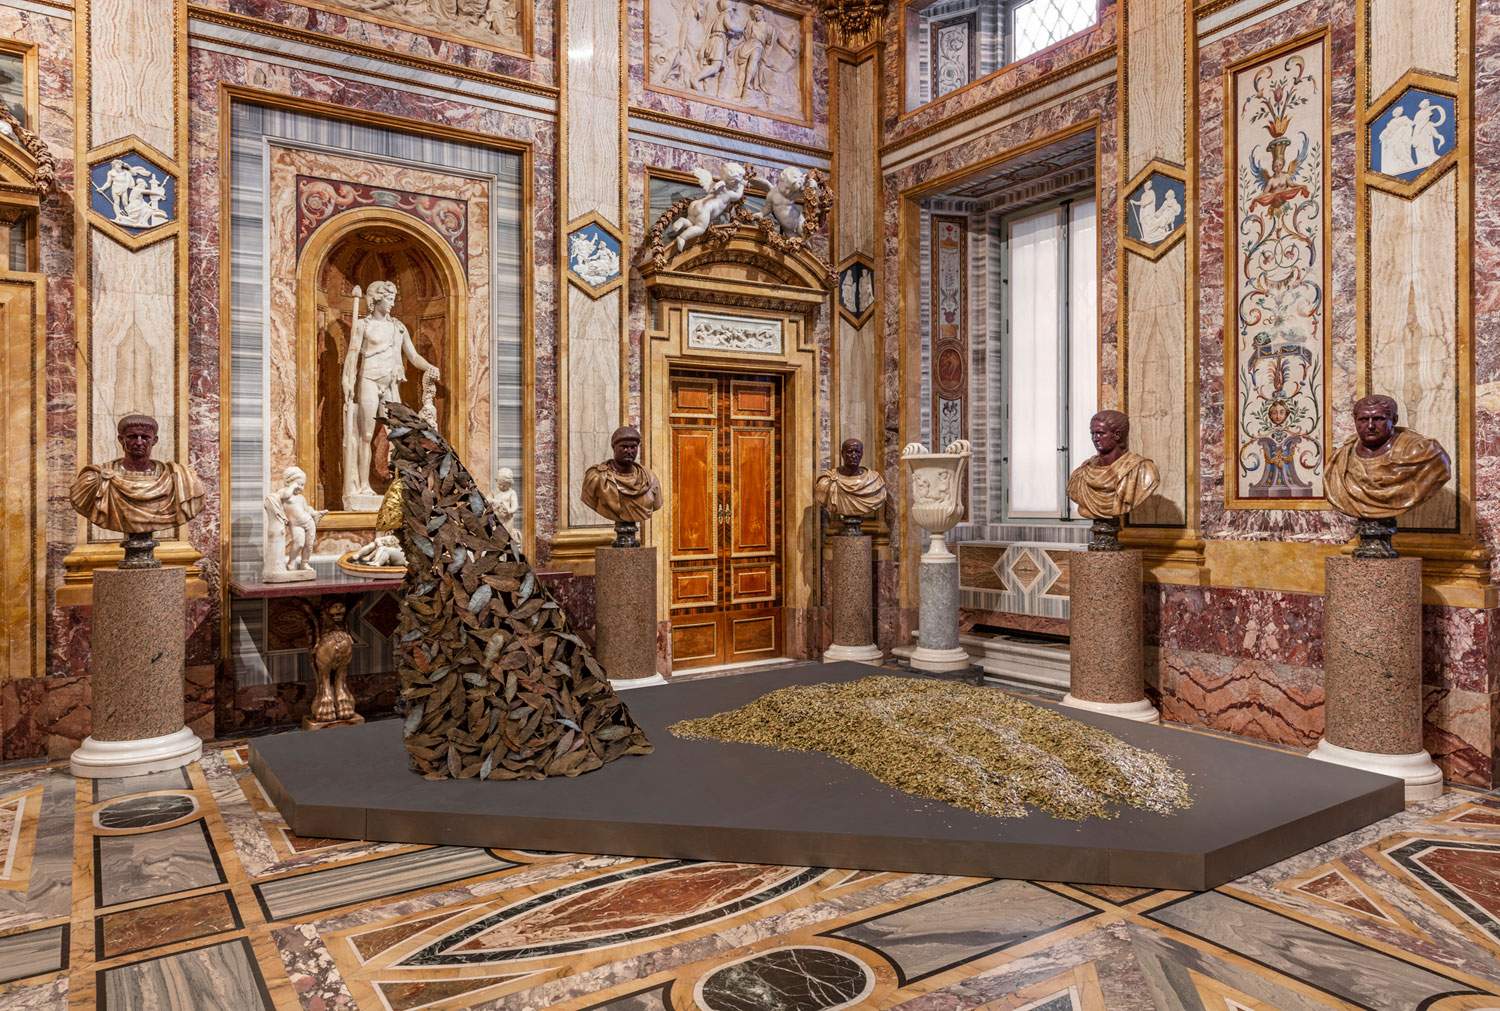 Contemporary art returns to Borghese Gallery with Giuseppe Penone, master of Arte Povera 